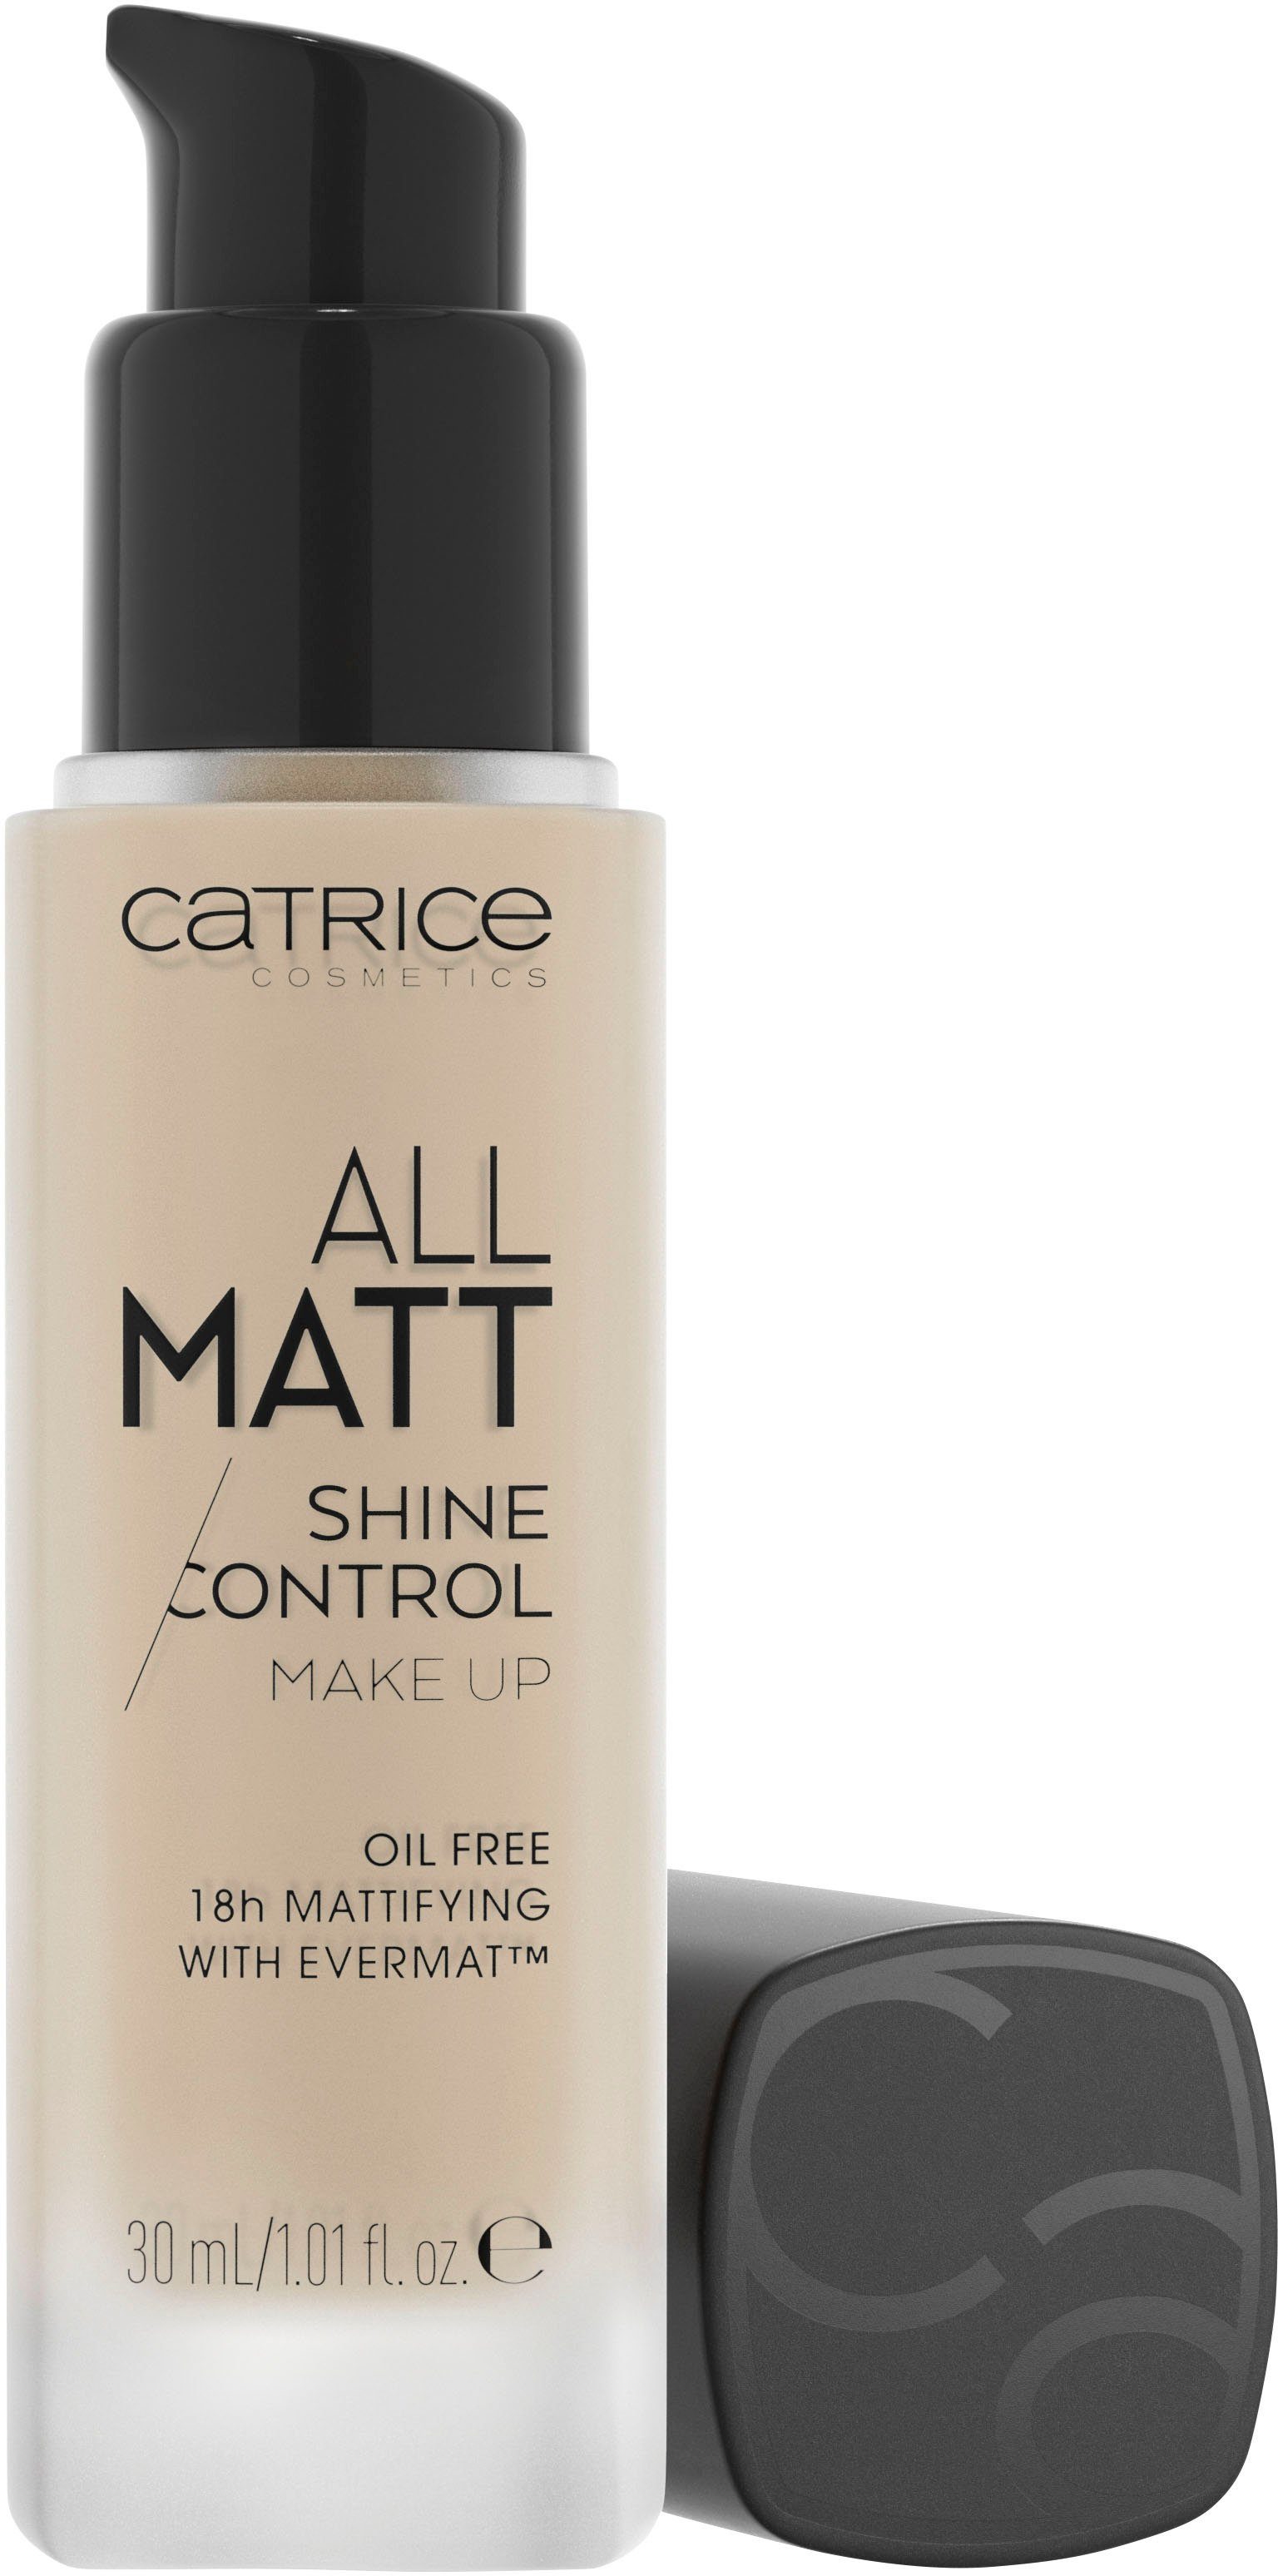 Control Up Beige Matt All Light Foundation Neutral Catrice Make Shine